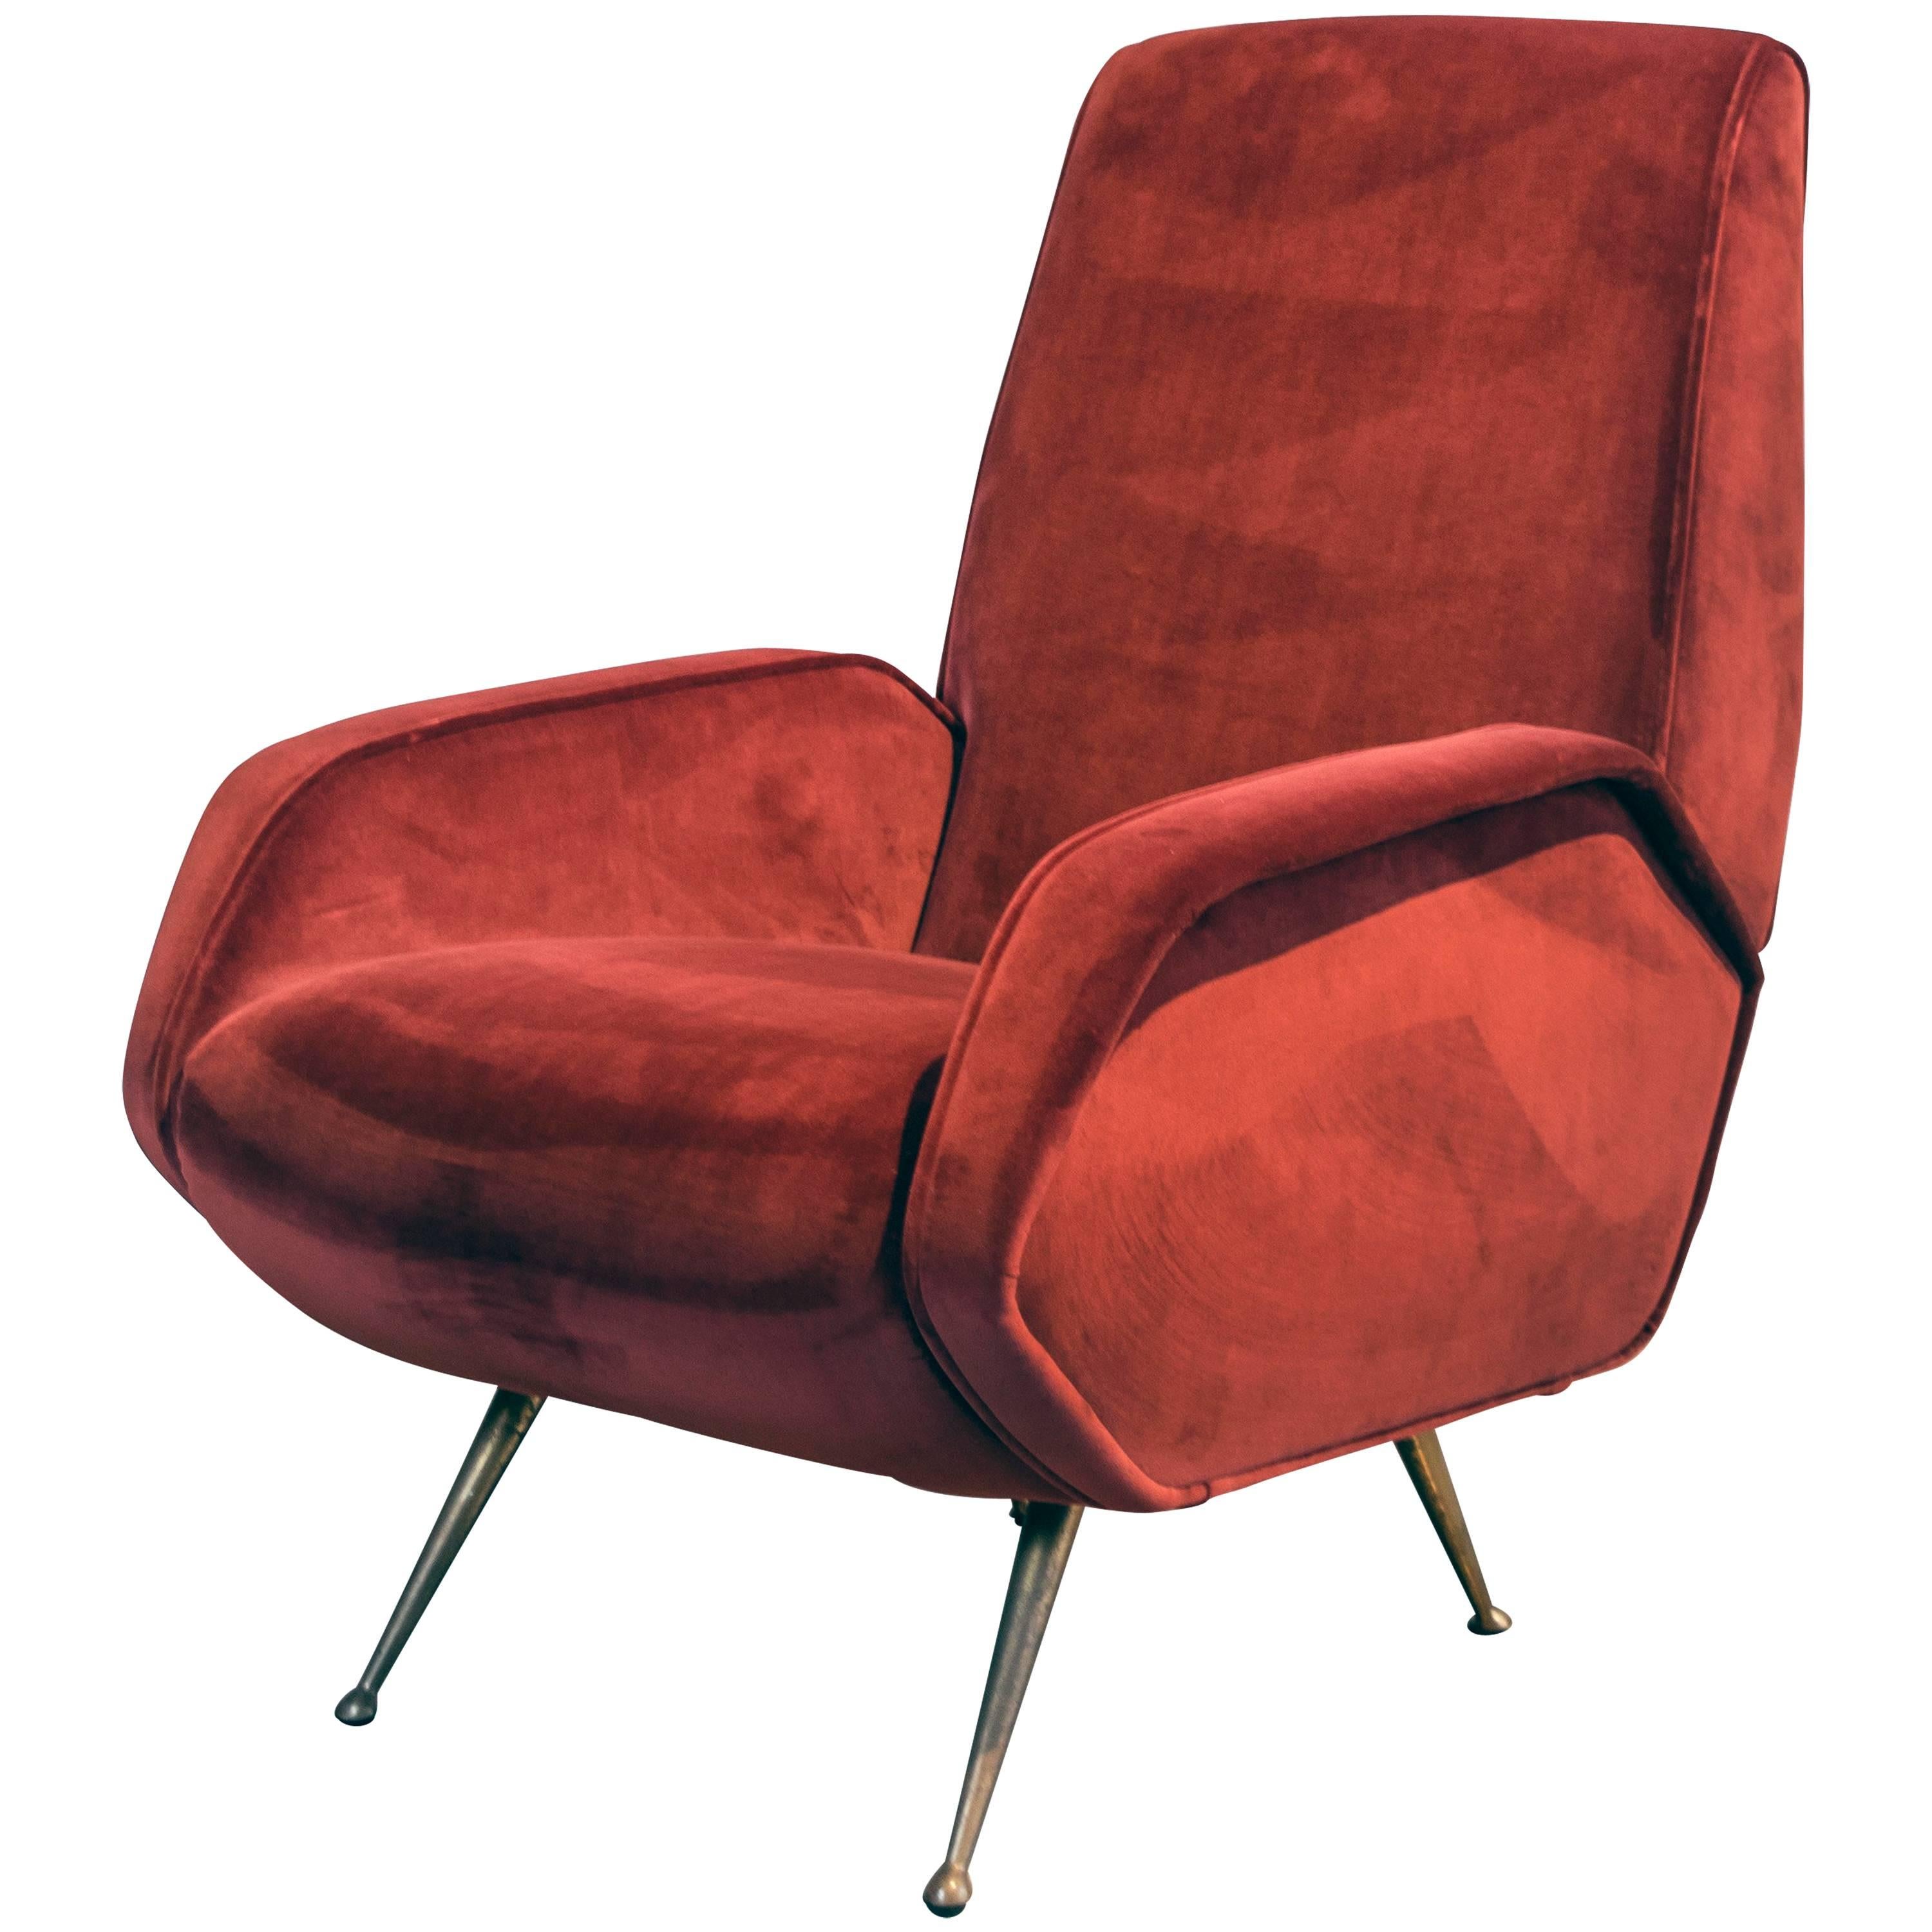 Italian Mid-Century Lounge Chair with Brass Legs by Arflex